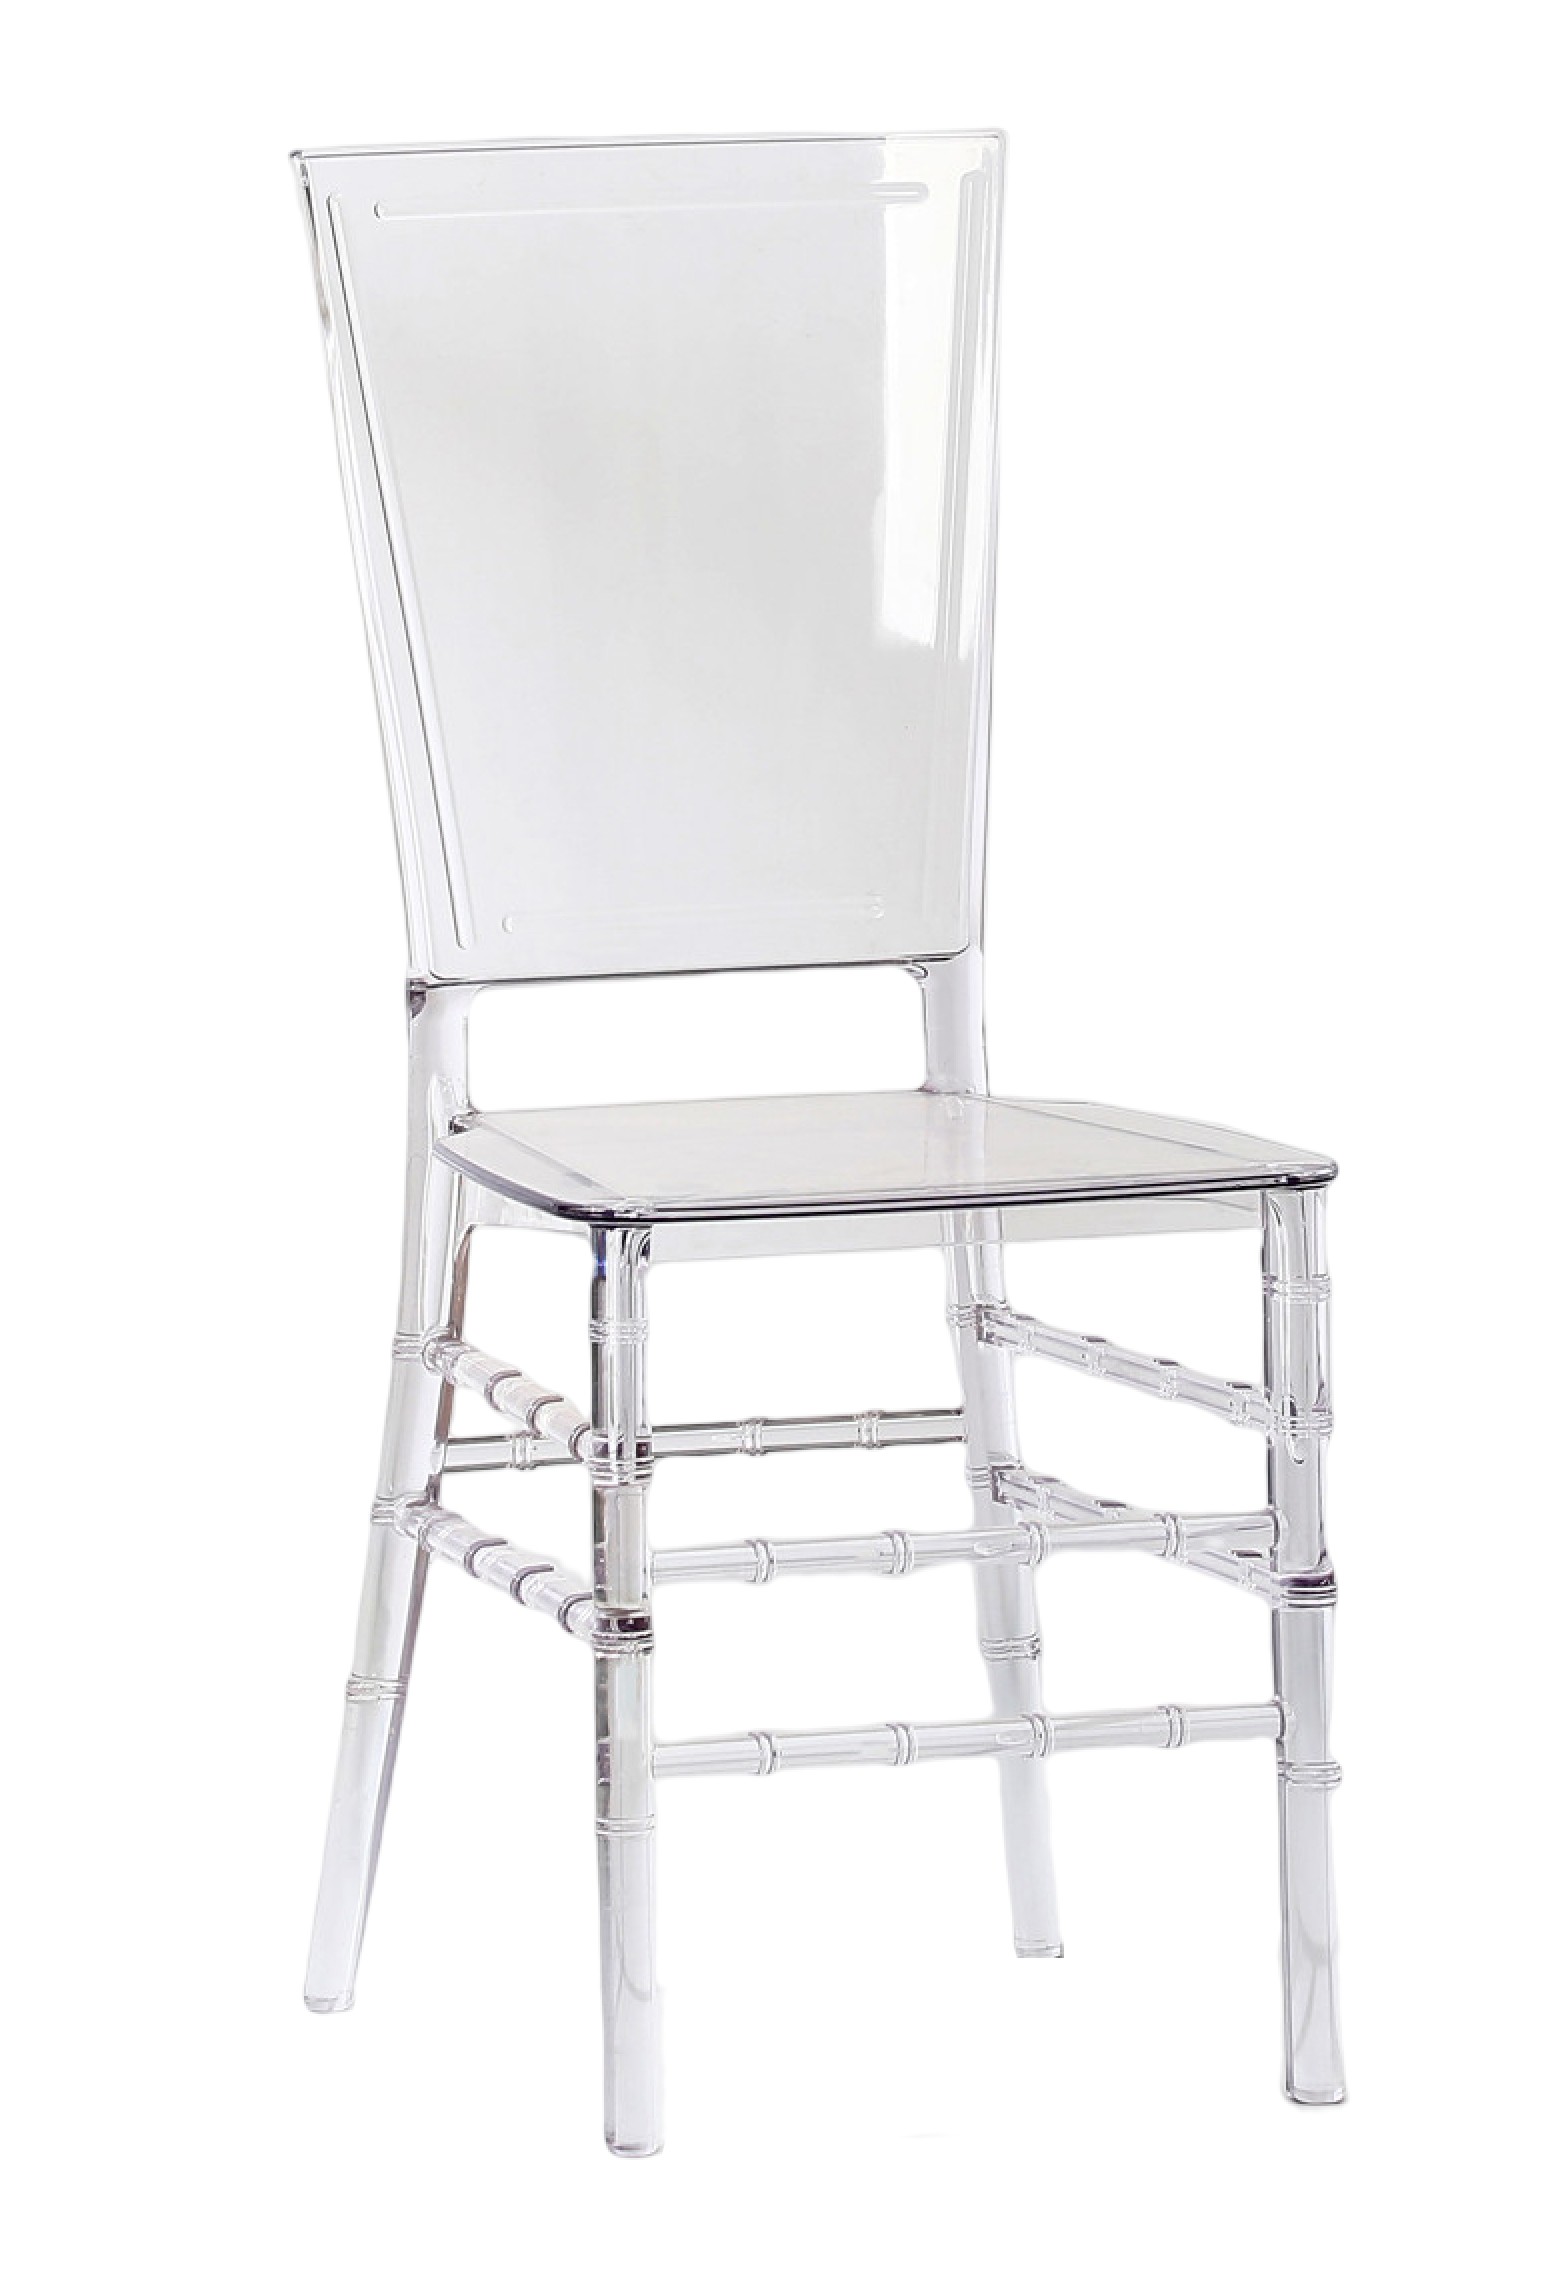 https://www.meublesconcept.fr/8532/chaise-felipe-ghost-en-polycarbonate-transparent.jpg